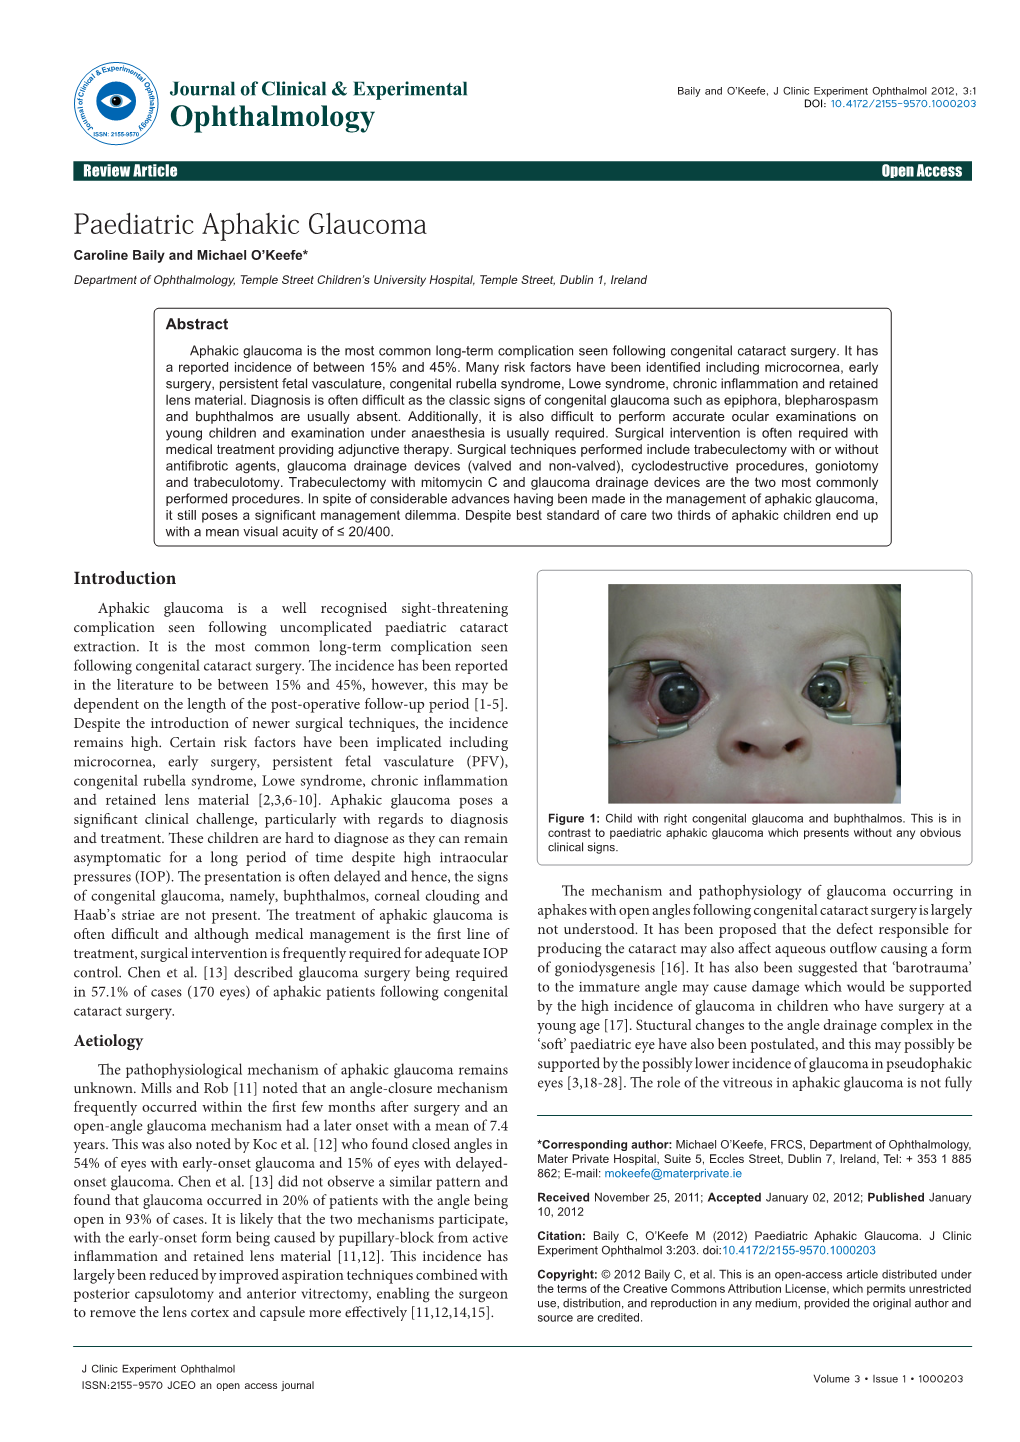 Paediatric Aphakic Glaucoma